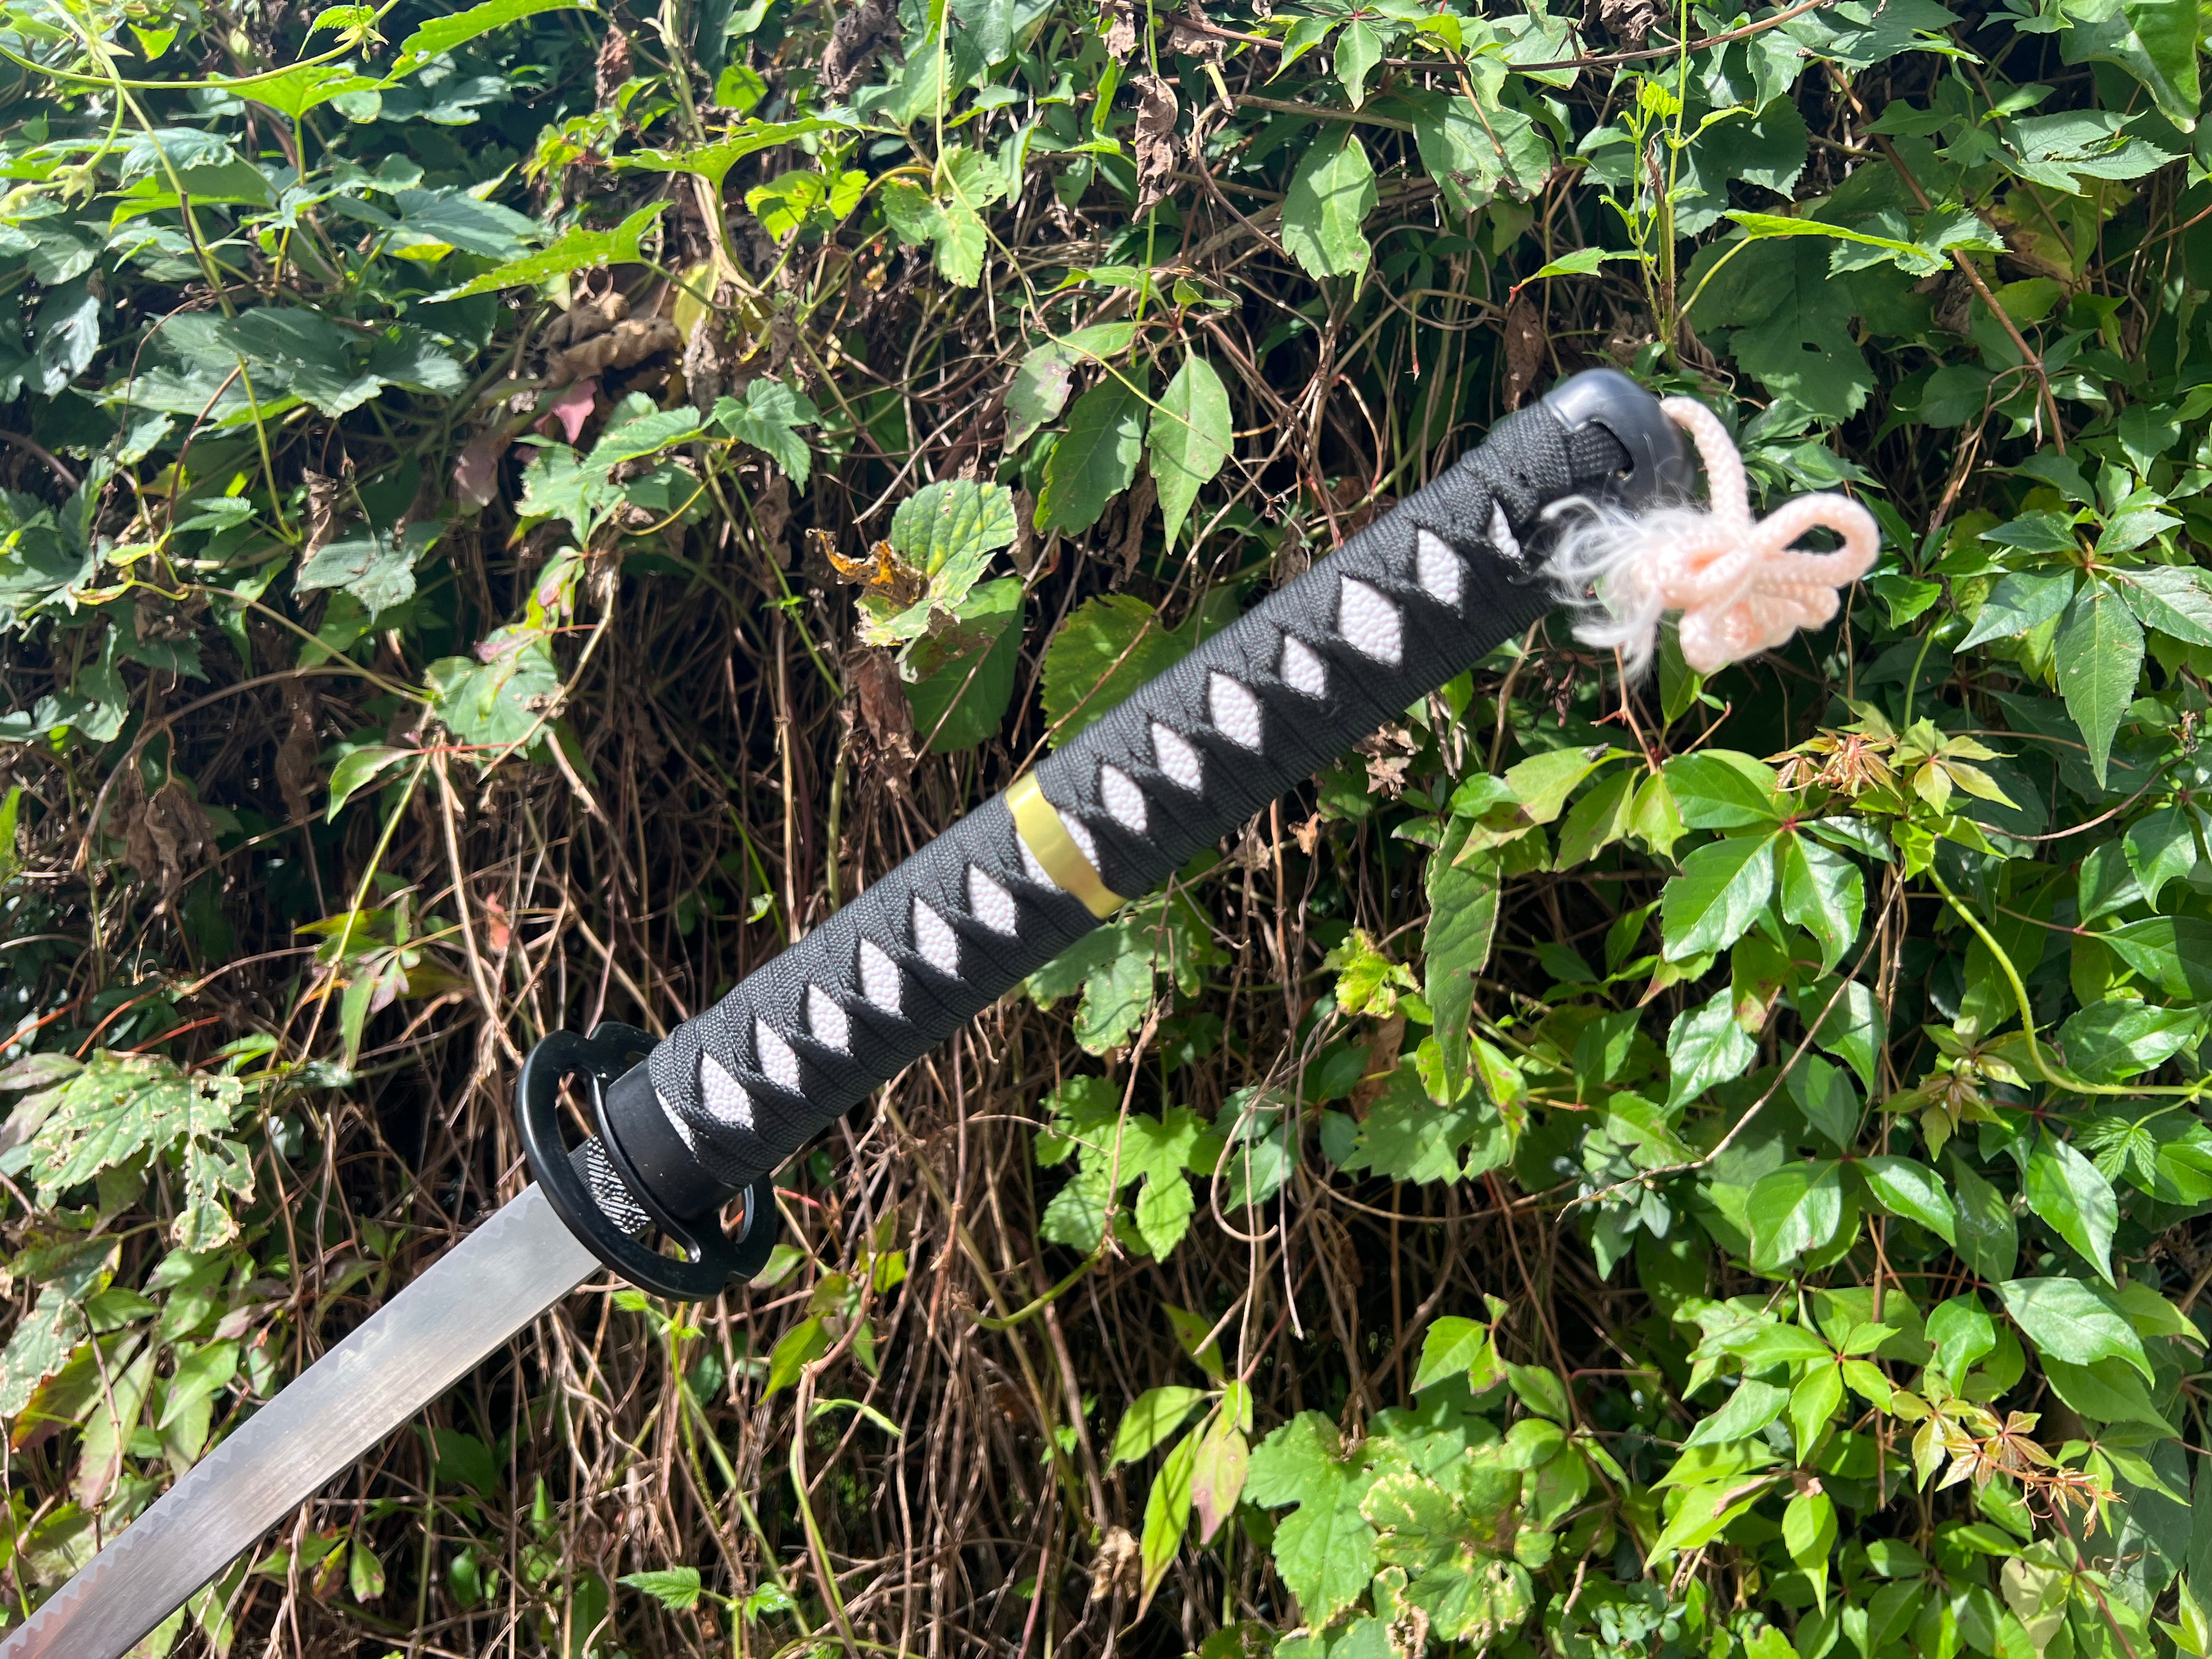 Decorative katana with carbon steel blade-masterpiece of aesthetics